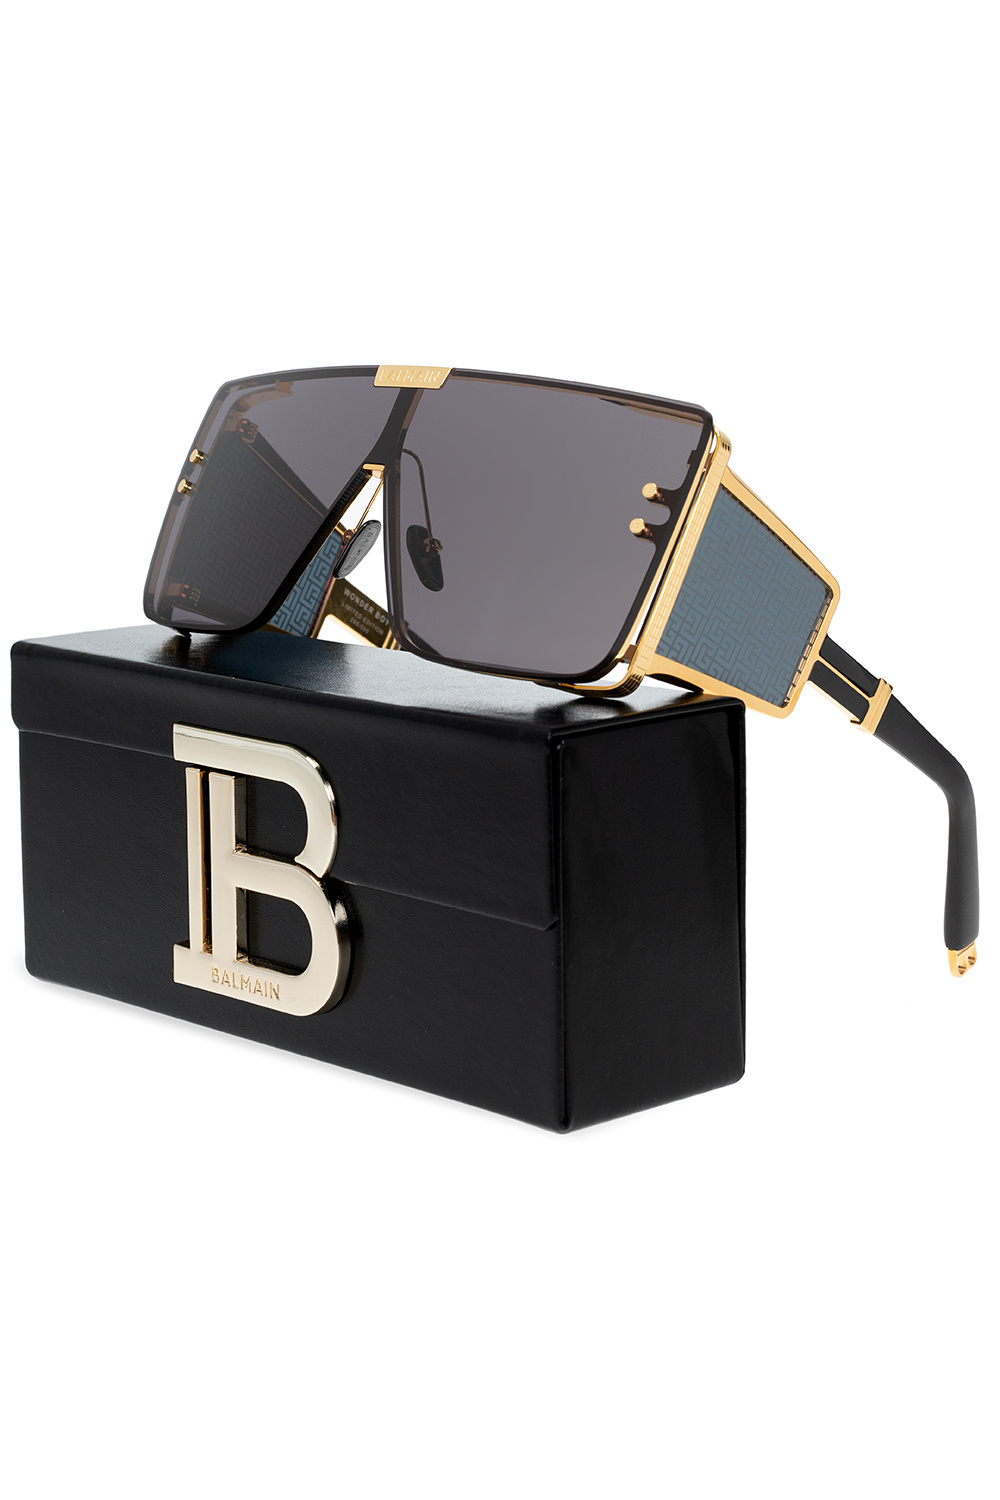 Balmain ‘Wonder Boy’ sunglasses